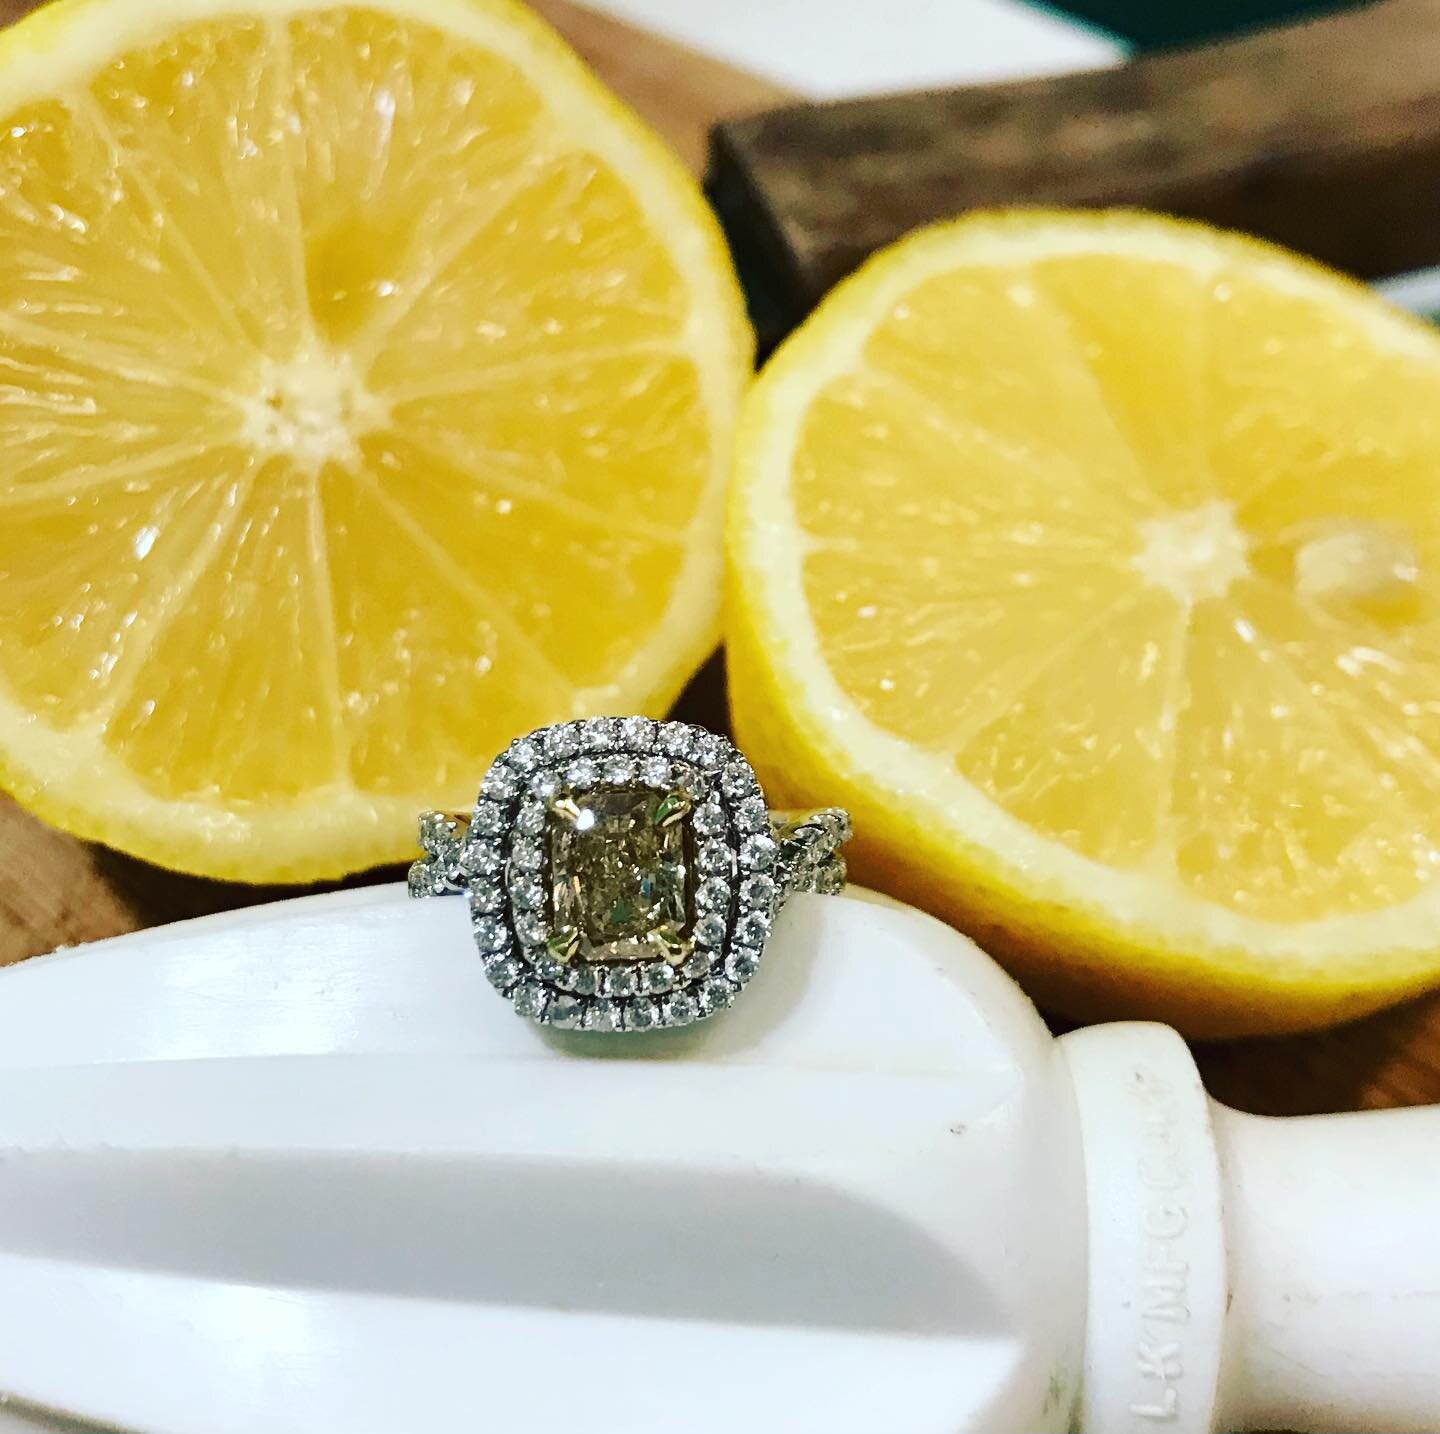 When life gives you lemons... Gorgeous 1.51 carat fancy yellow princess cut diamond in an 18k white gold halo setting with .92 tcw white diamonds. Sweet!